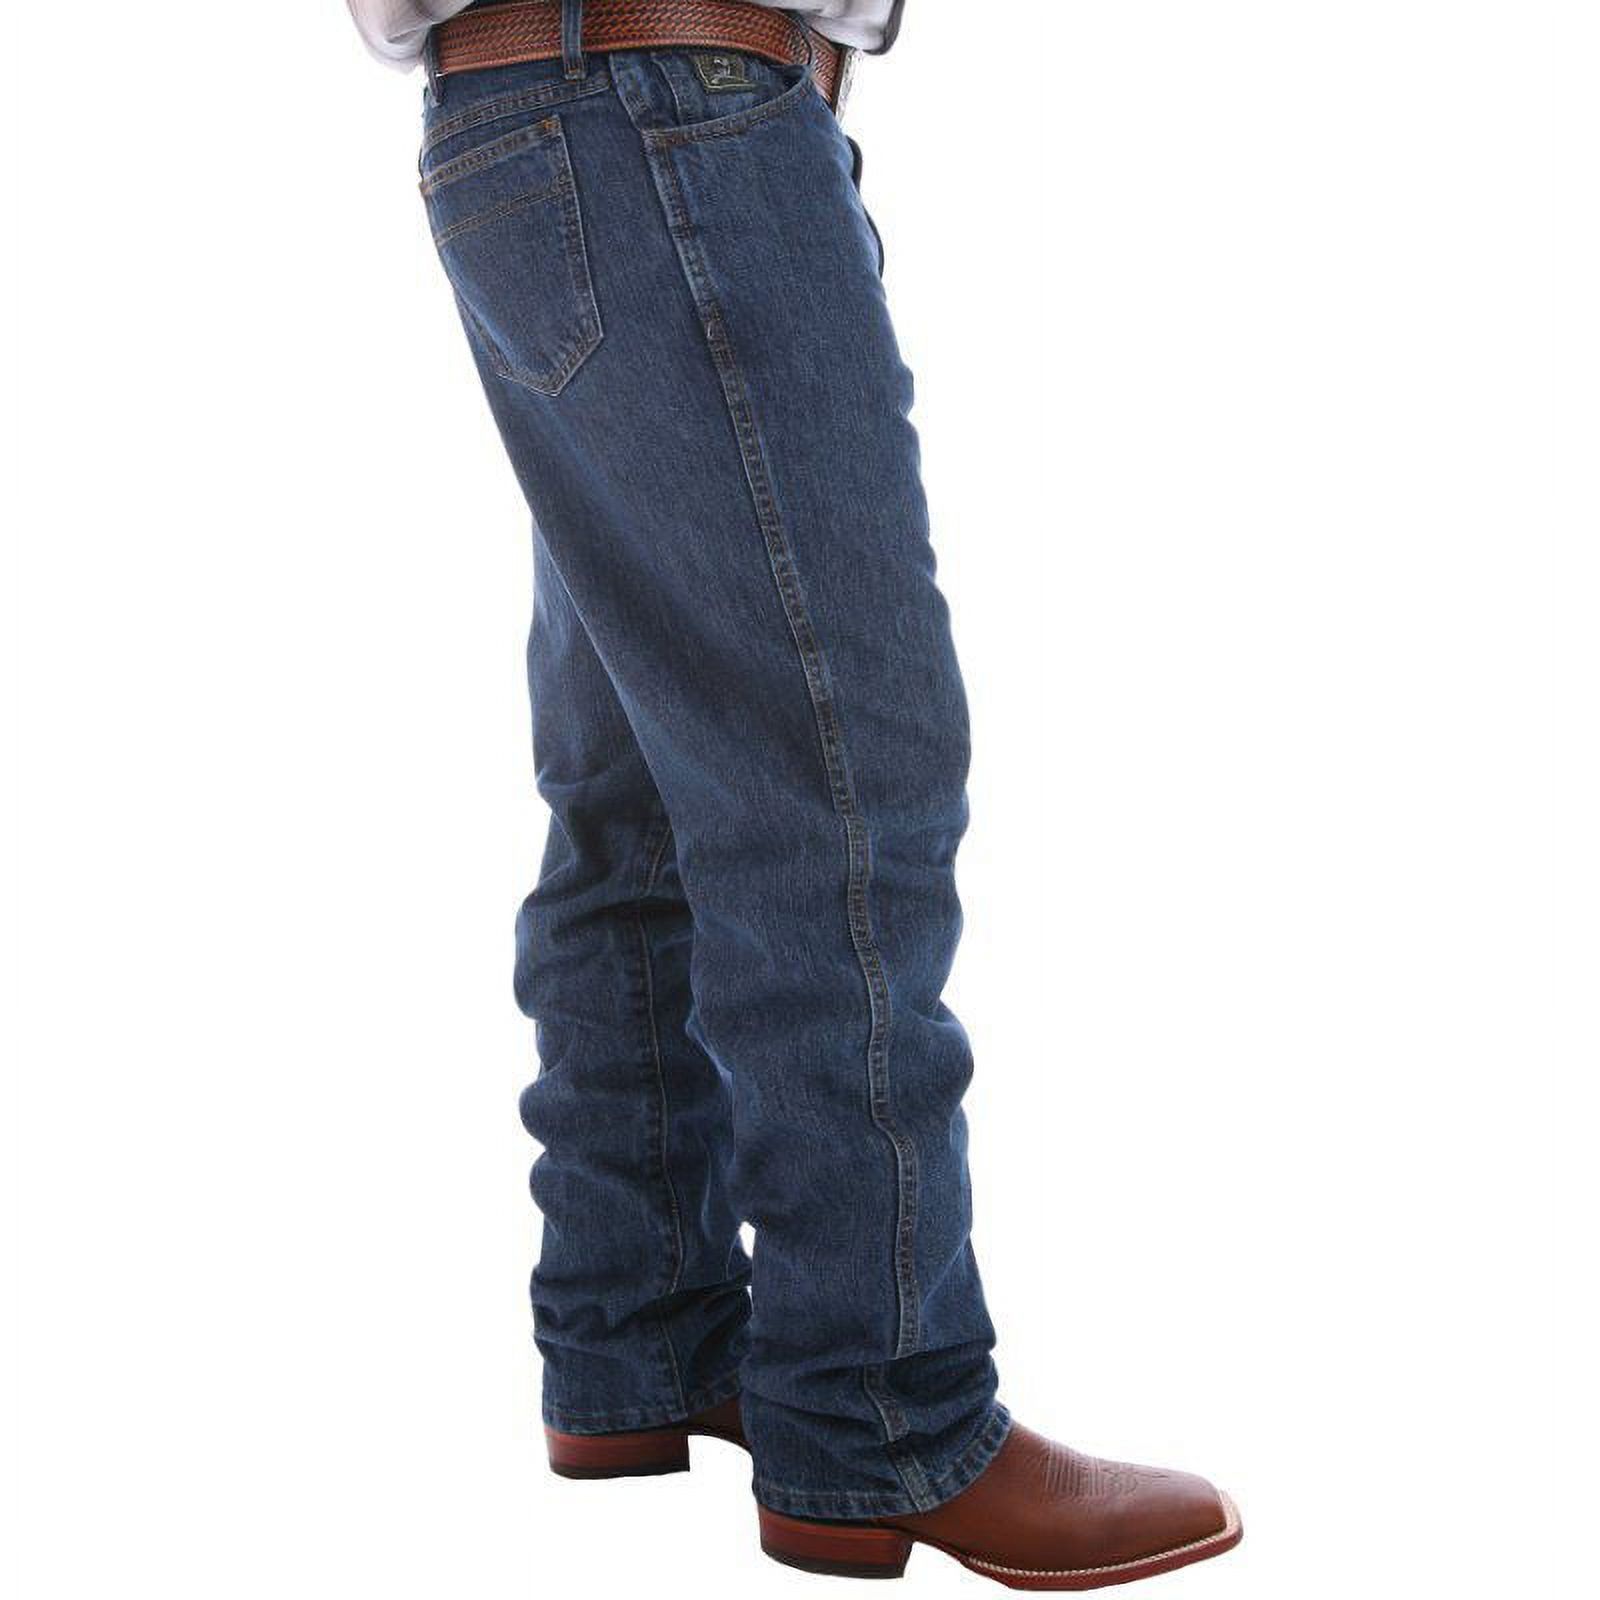 Cinch Apparel Mens Green Label Original Fit Jeans 34x30 Dark Stonewash - image 2 of 4